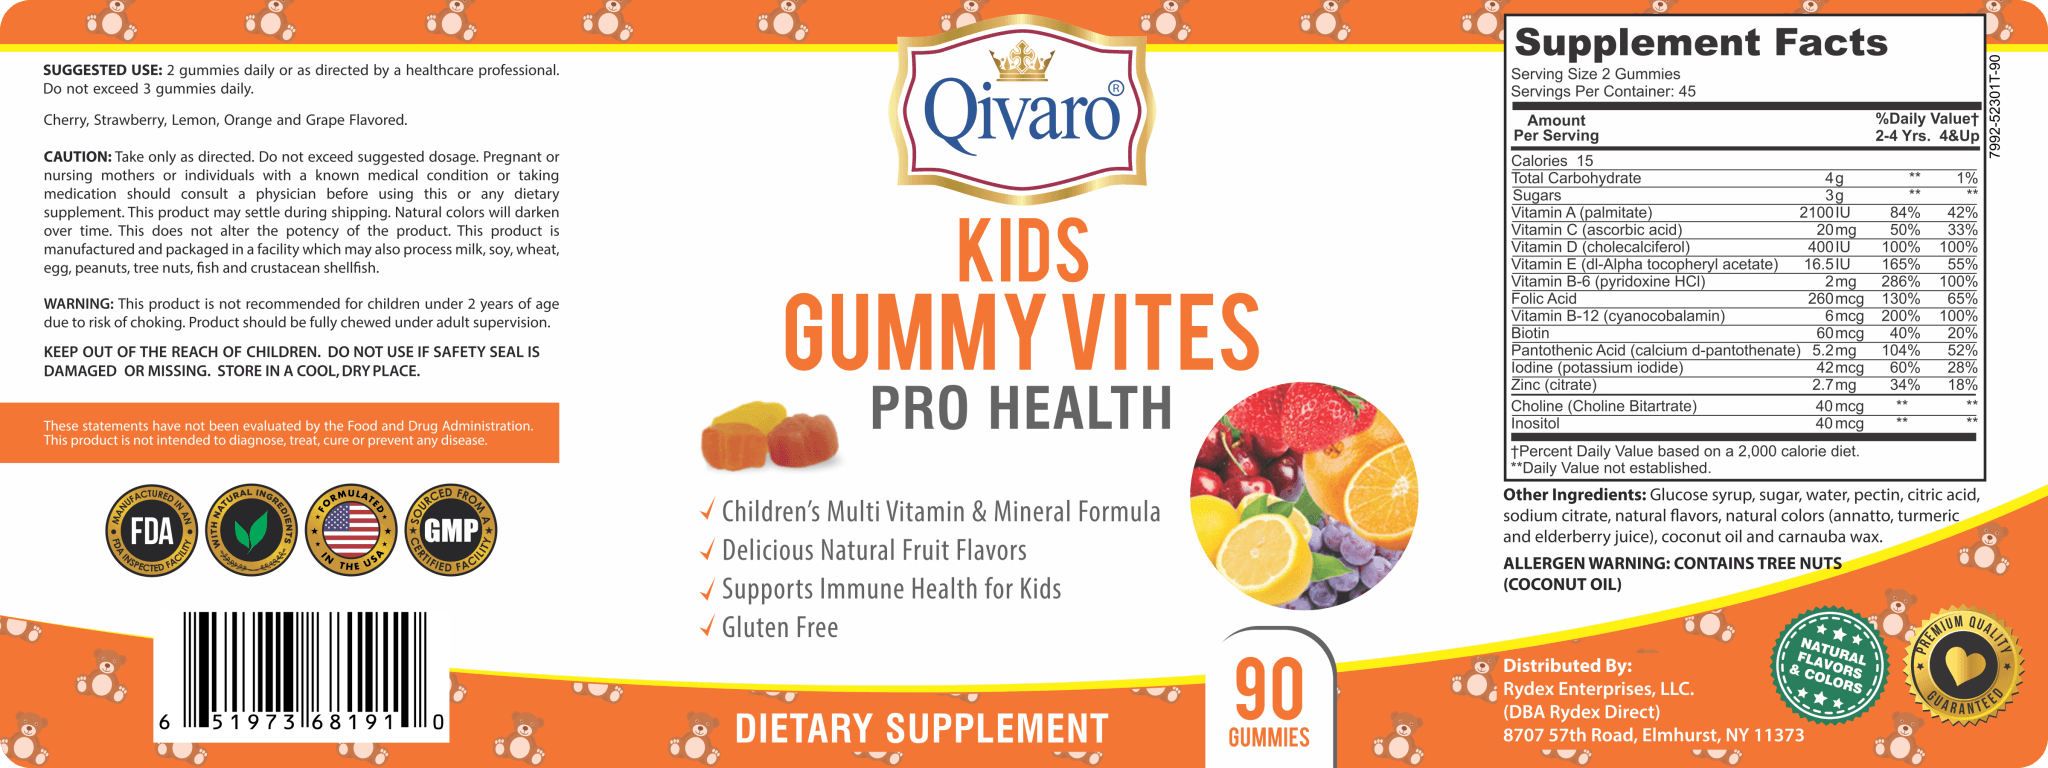 QKG01 - KIDS GUMMY VITES PRO HEALTH By Qivaro - 90 GUMMIES - Qivaro USA